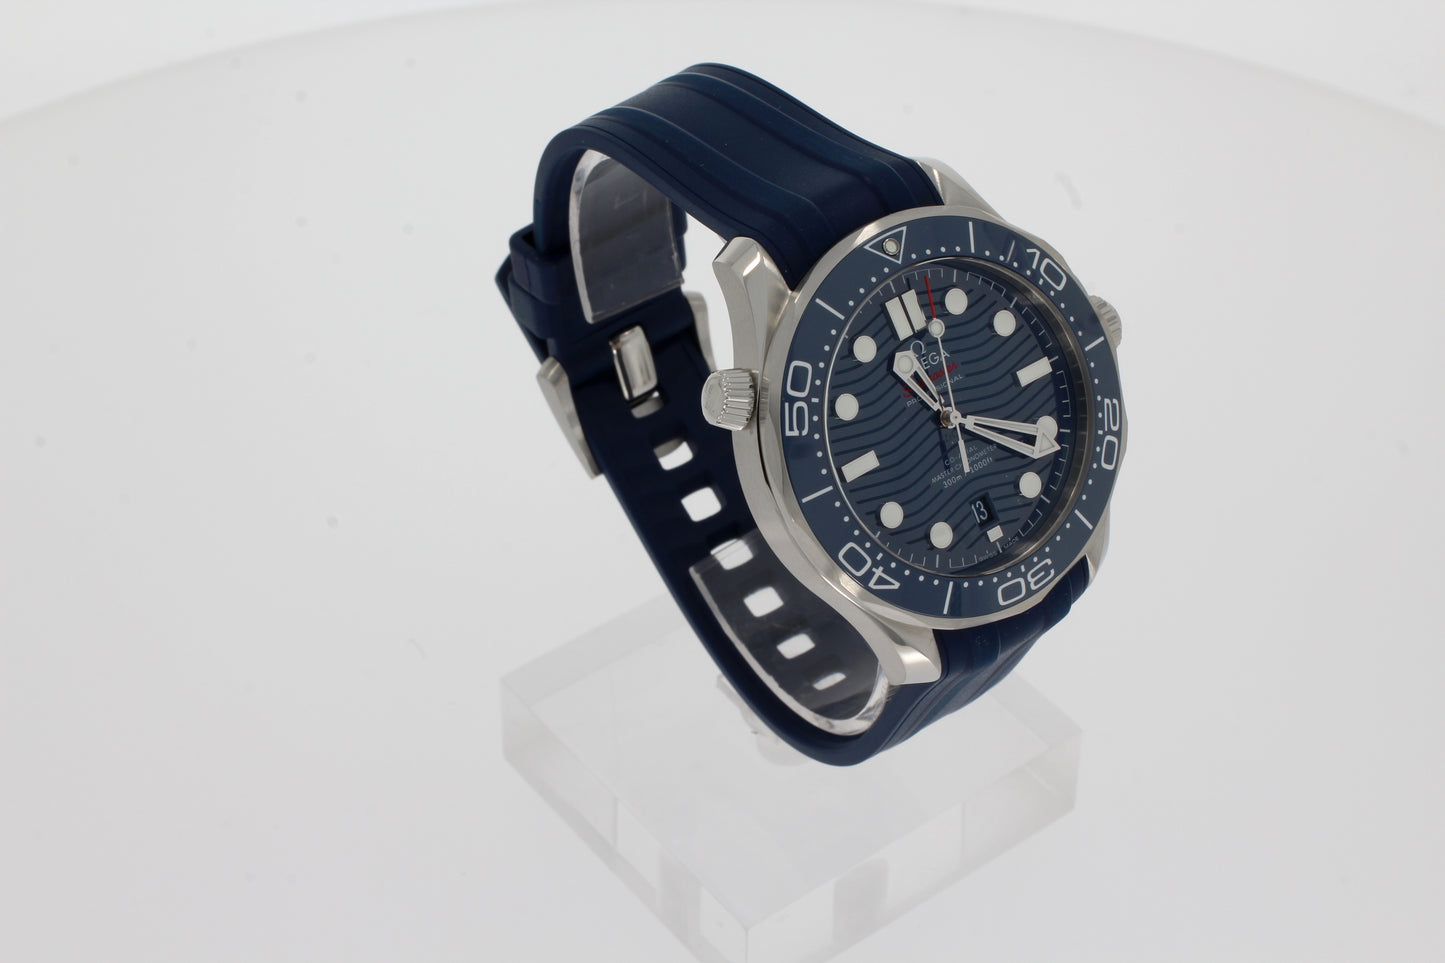 Omega Seamaster Diver 300 M Co-Axial Chronometer 210.32.42.20.03.001  blau 42mm Stahl, blaues Kautschuk-Armband